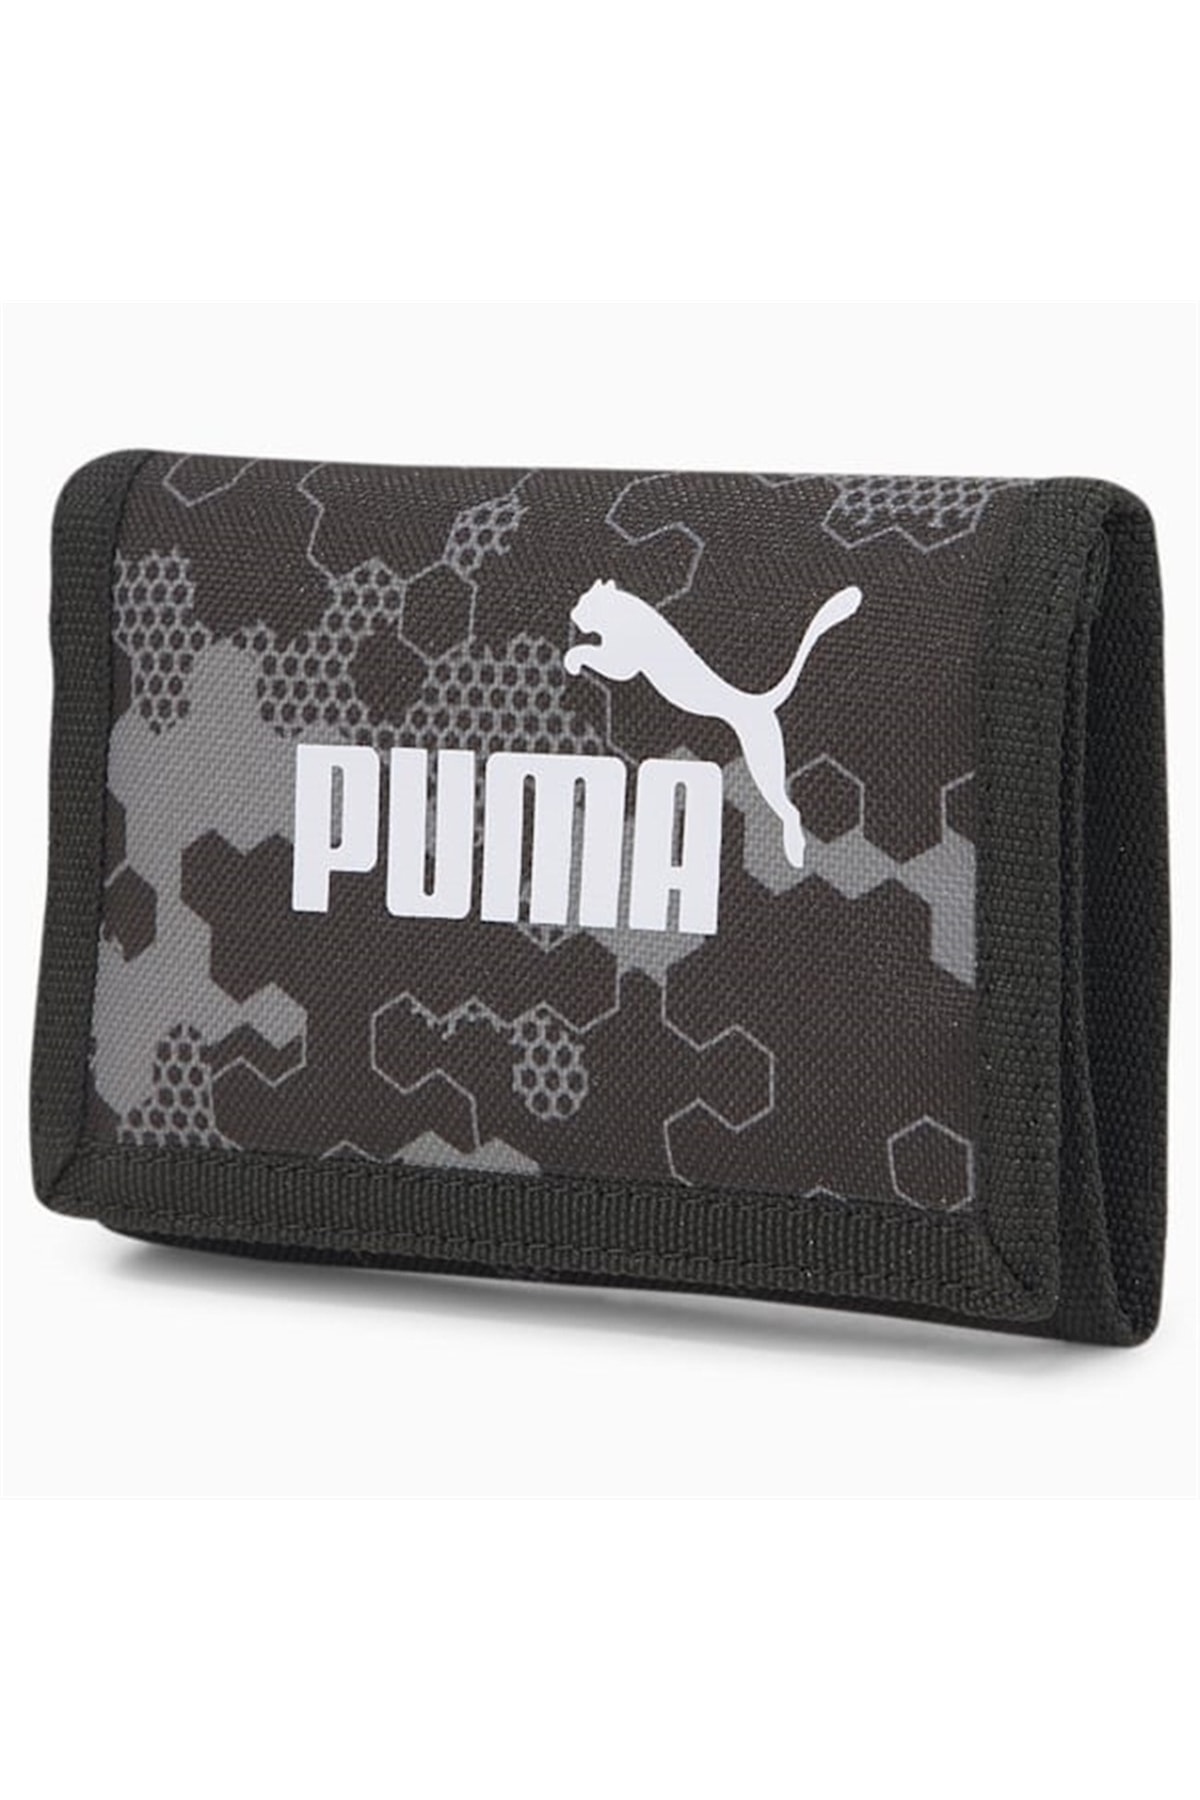 Puma Phase Aop - Unisex Siyah Spor Cüzdan - 078964 10